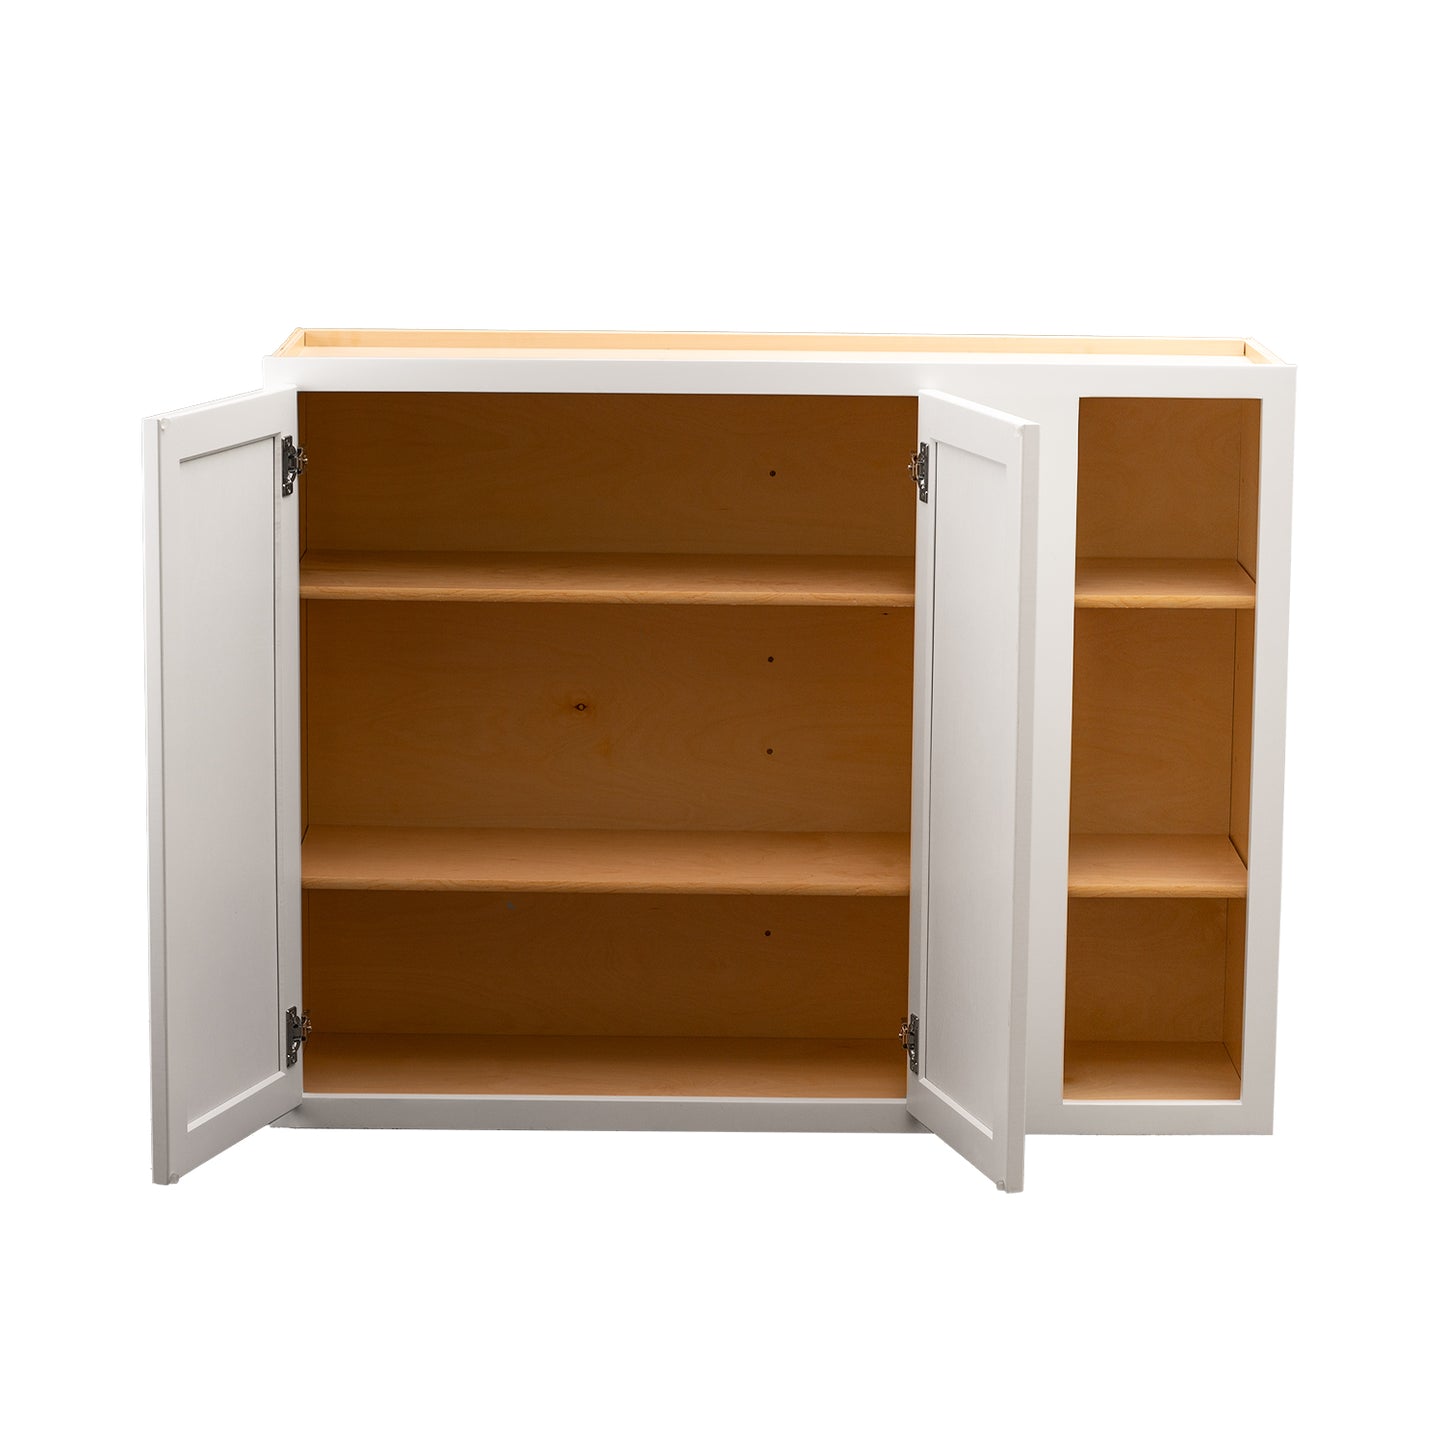 Quicklock RTA (Ready-to-Assemble) Pure White 42"Wx30"Hx12"D Blind Corner Wall Cabinet